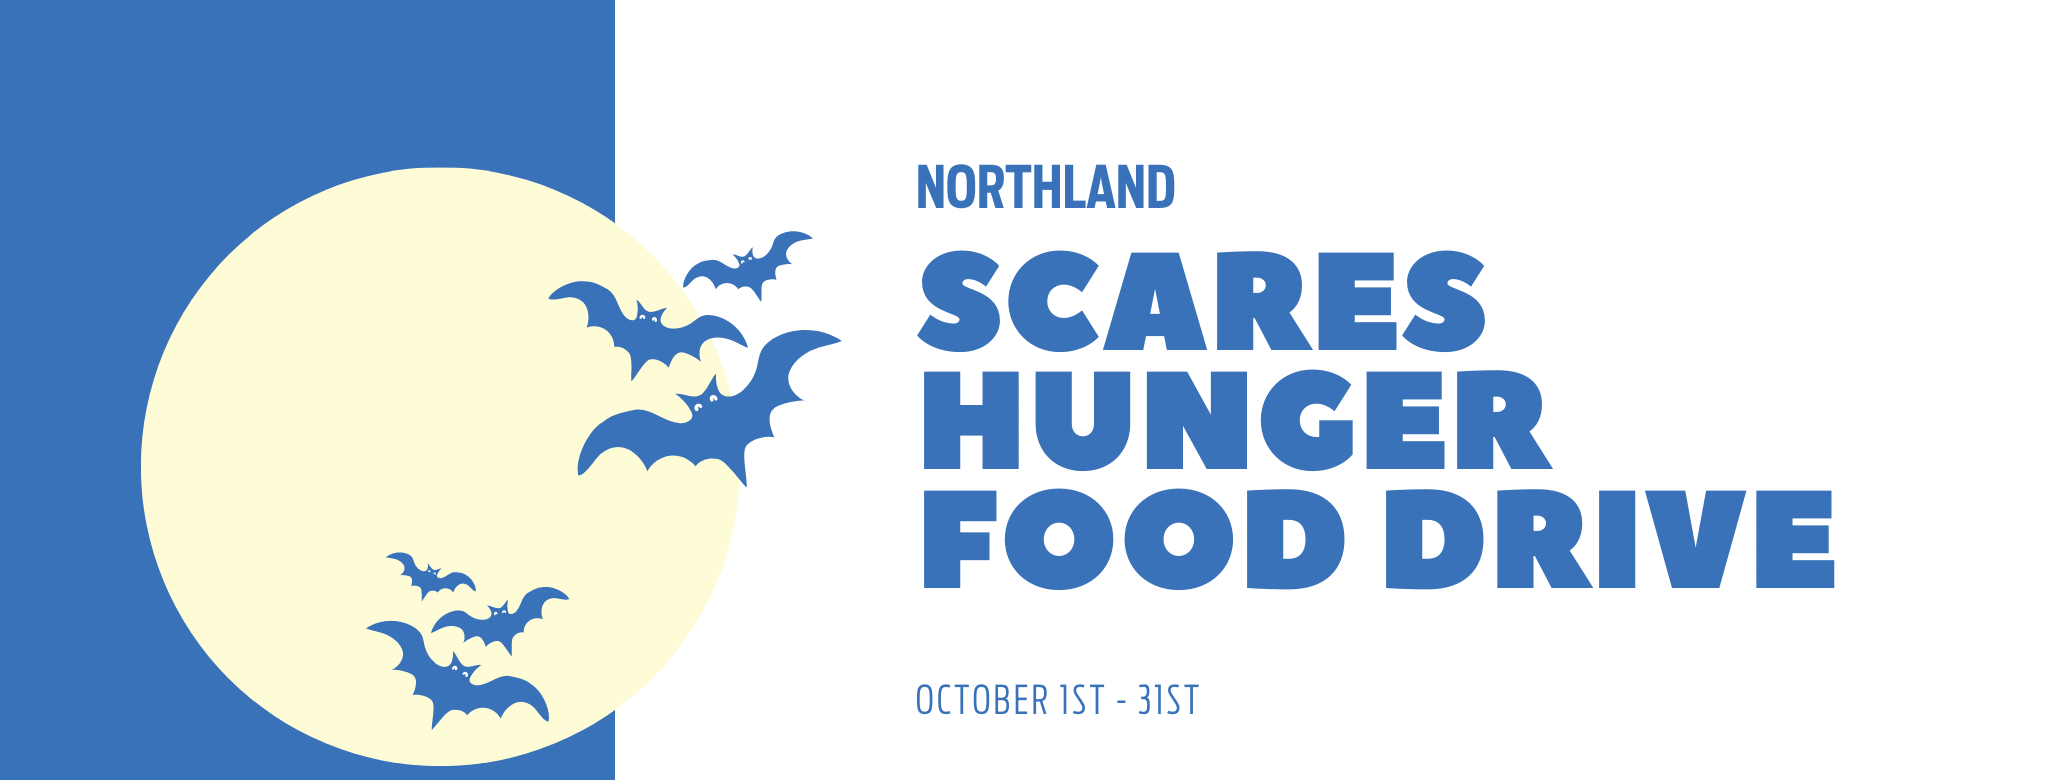 Northland-scares-hunger